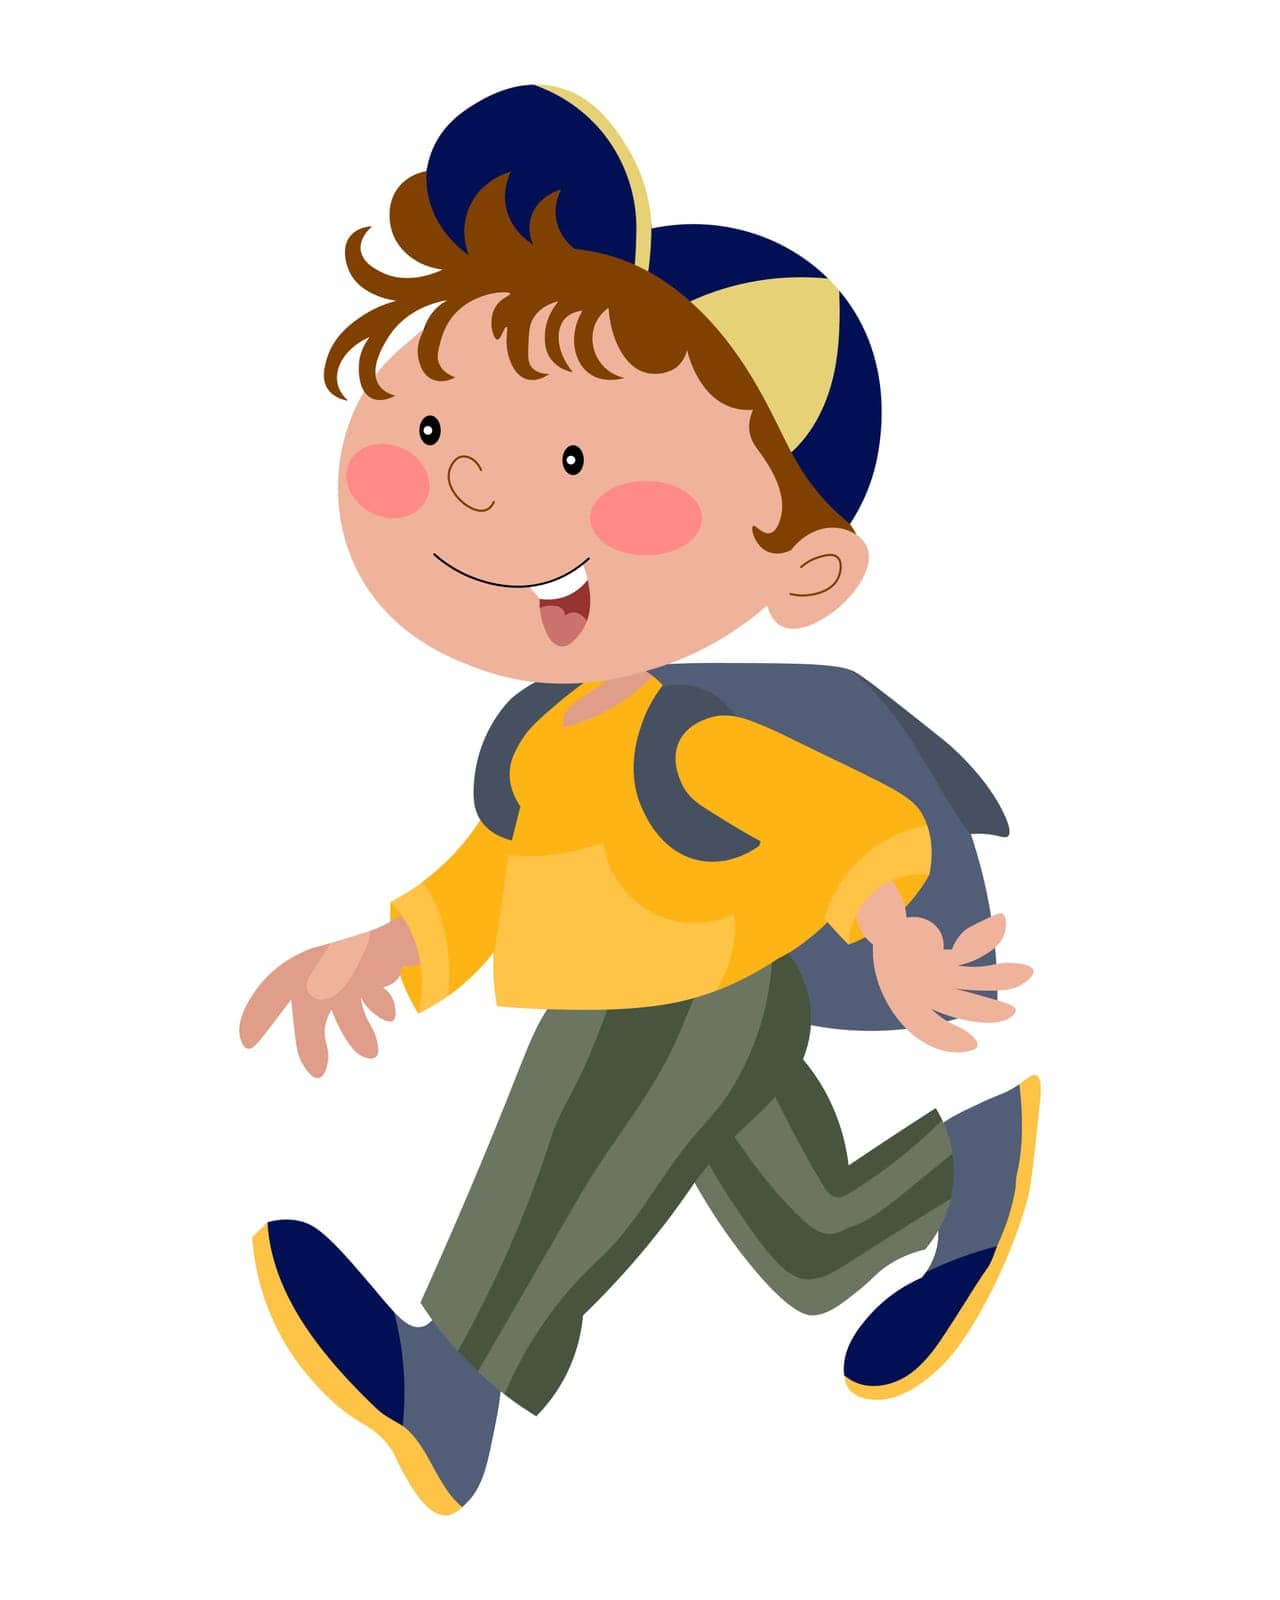 Cute little boy with school backpack. Illustration, cartoon style, vector